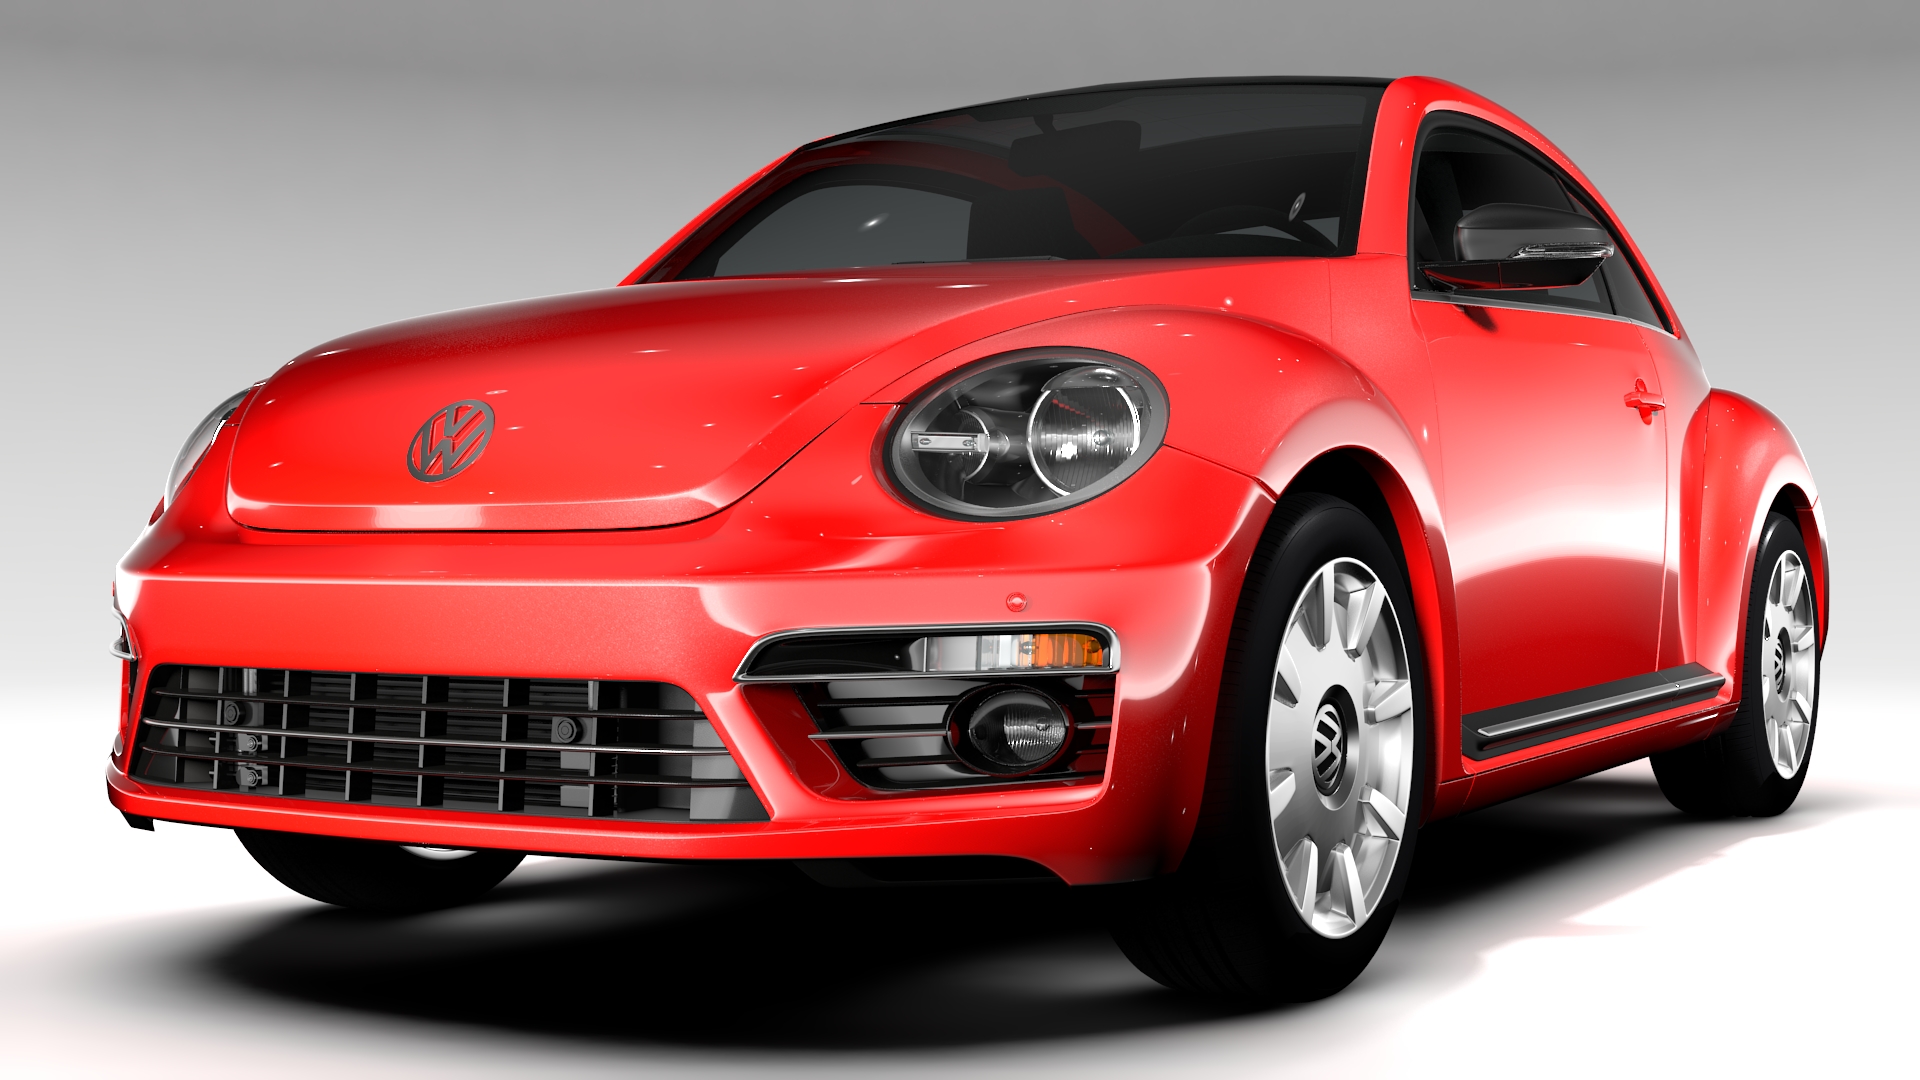 VW Beetle Turbo 2017 3D Model – Buy VW Beetle Turbo 2017 ...